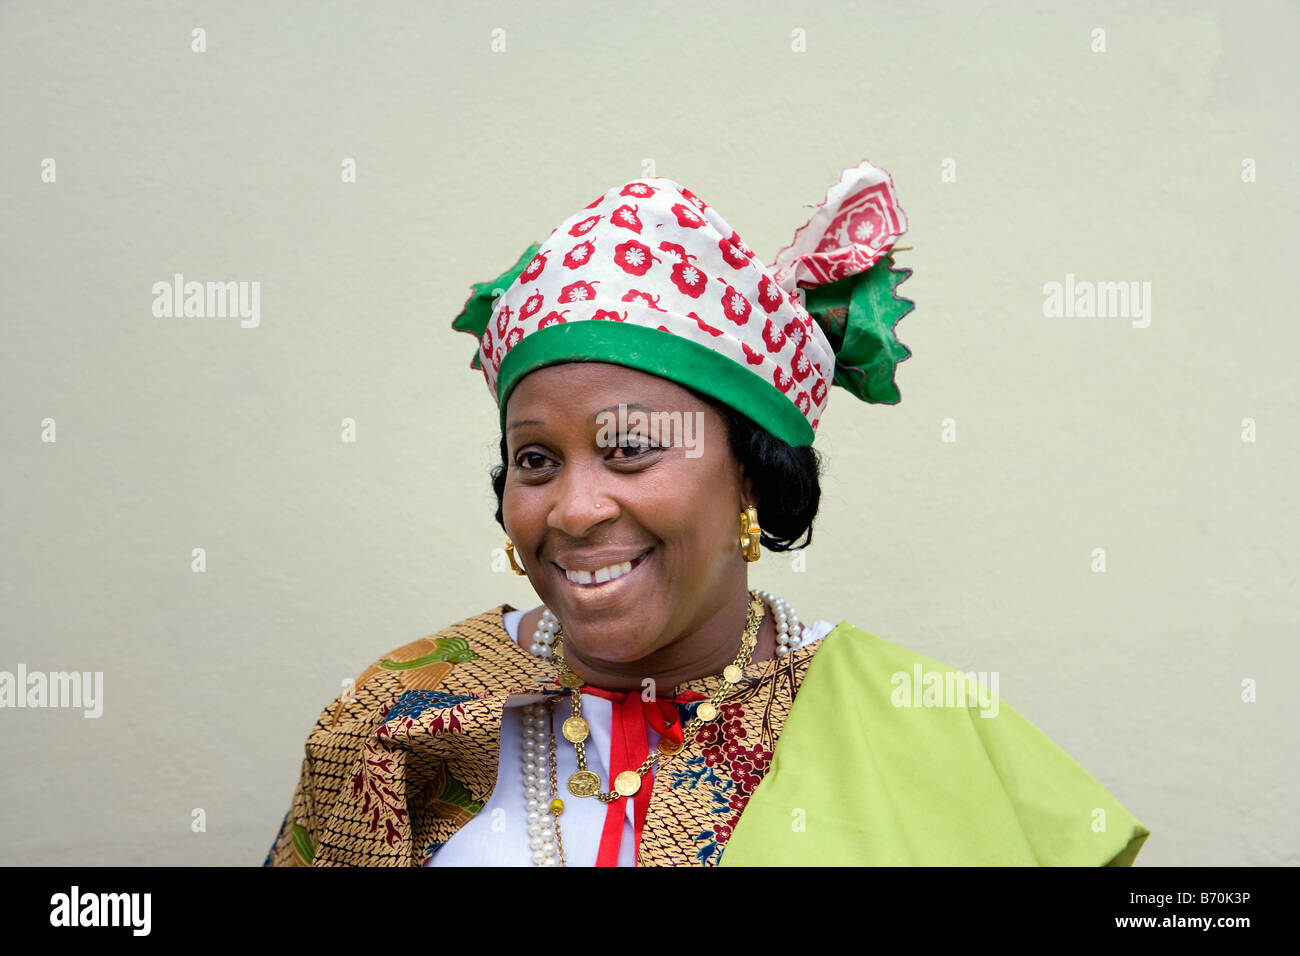 https://c8.alamy.com/comp/B70K3P/suriname-paramaribo-creole-women-in-kotomisi-dress-the-national-creole-B70K3P.jpg